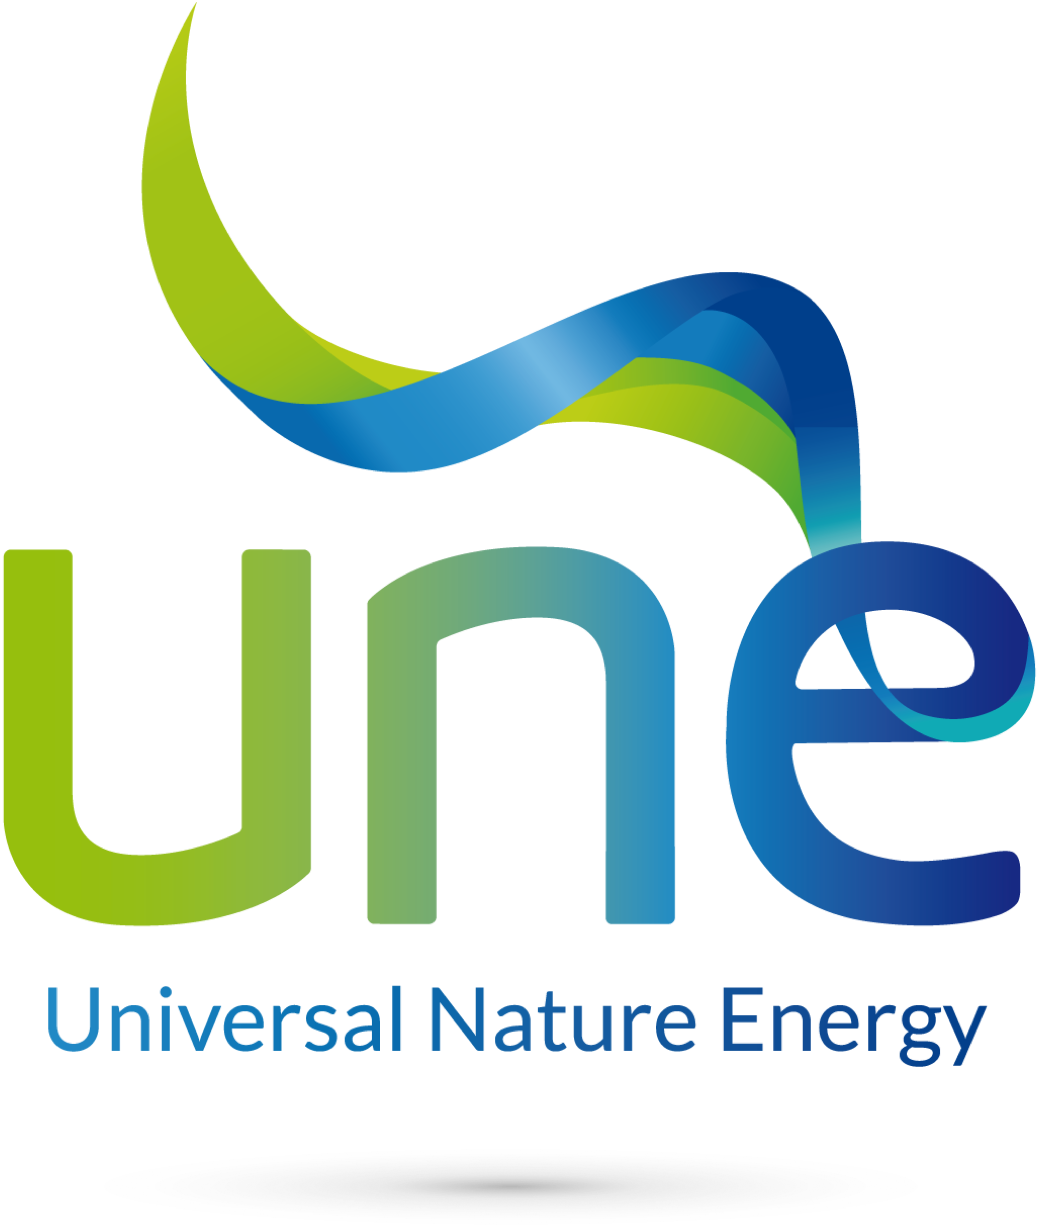 UNE Universal Nature Energy